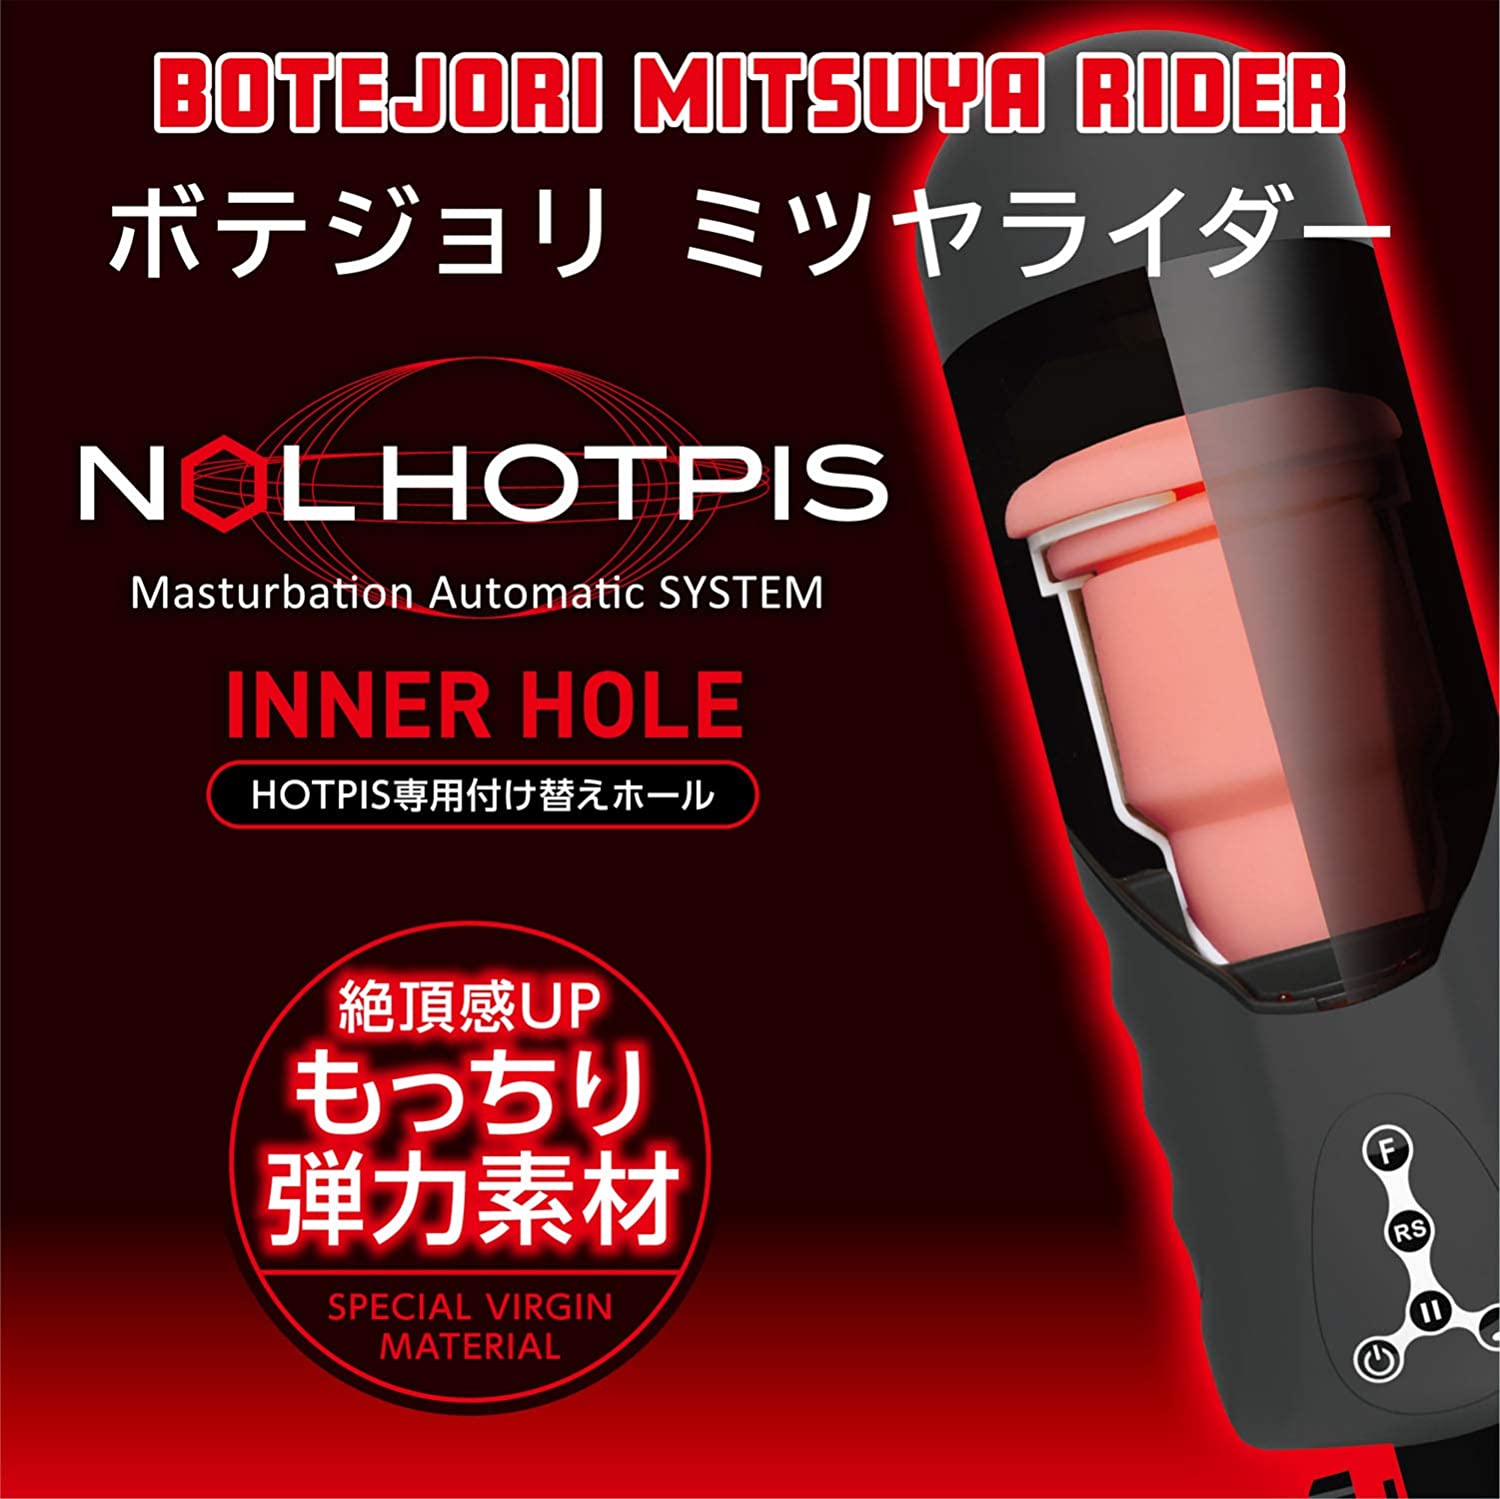 HOTPIS INNER HOLE 03 BOTEJORI MITSUYA RIDER（インナーホール 03 ボテジョリ ミツヤライダー）の製品概要02